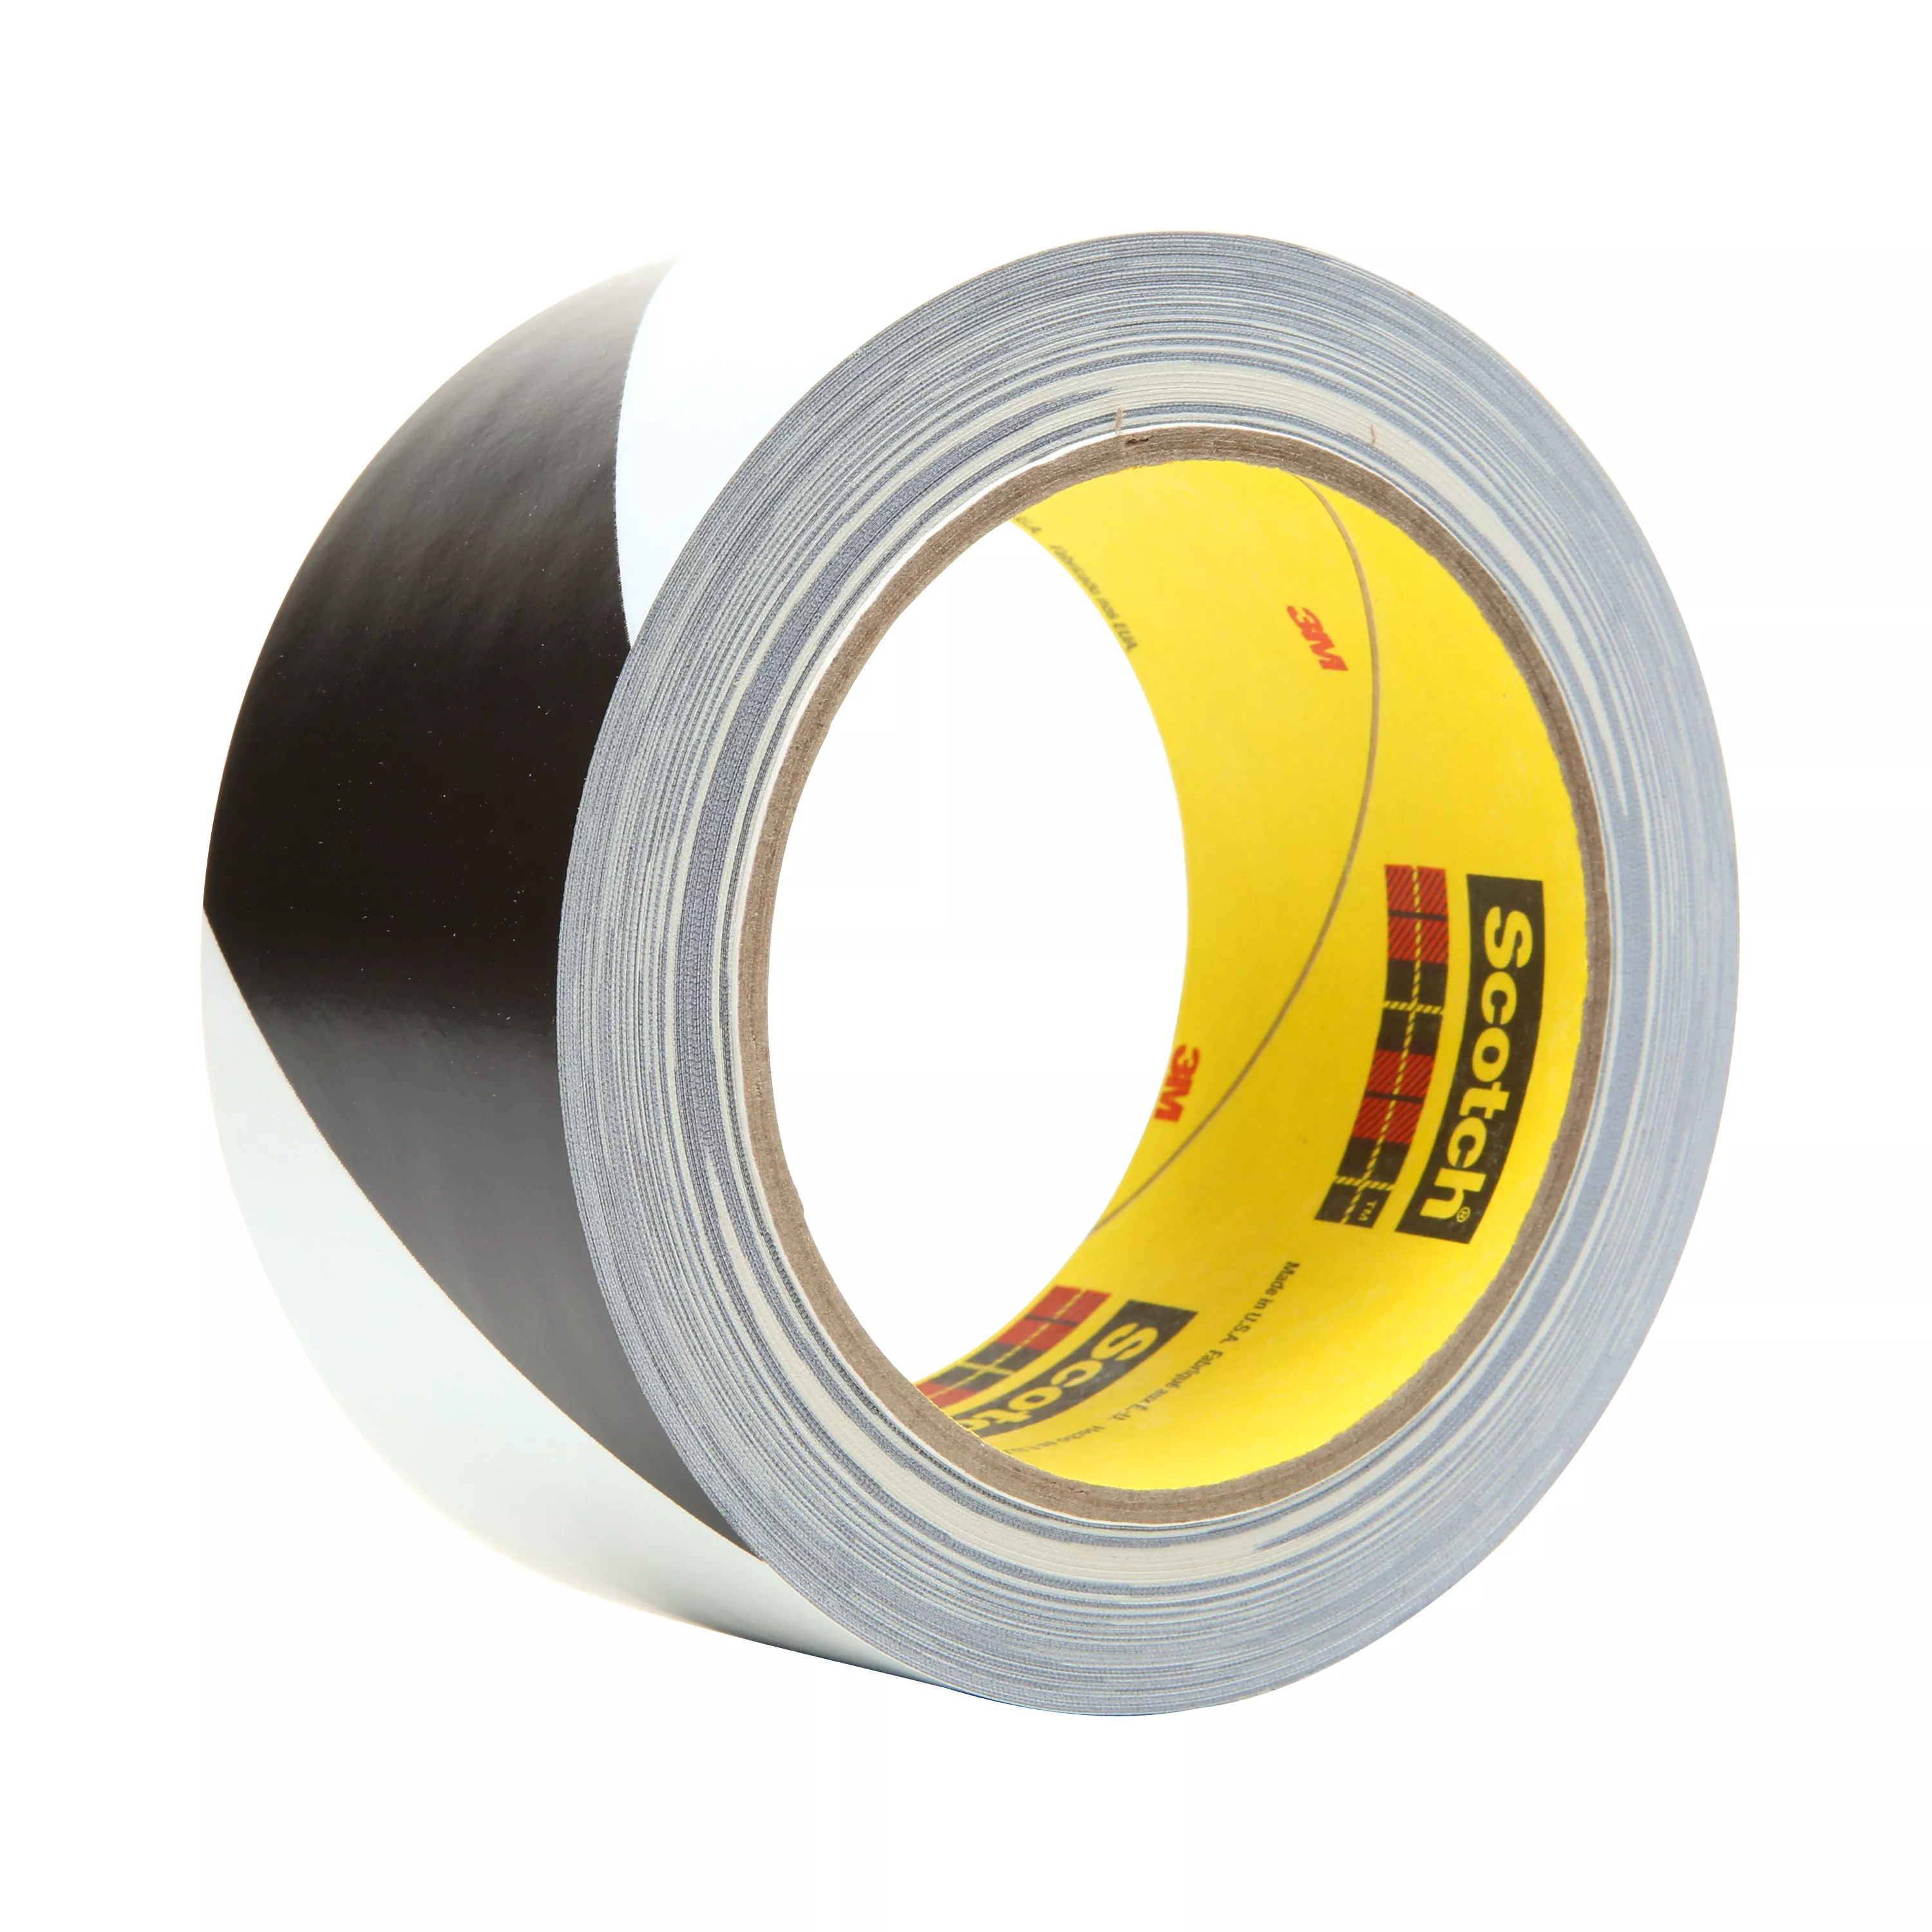 3M™ Safety Stripe Vinyl Tape 5700, Black/White, 2 in x 36 yd, 5.4 mil, 24 Roll/Case